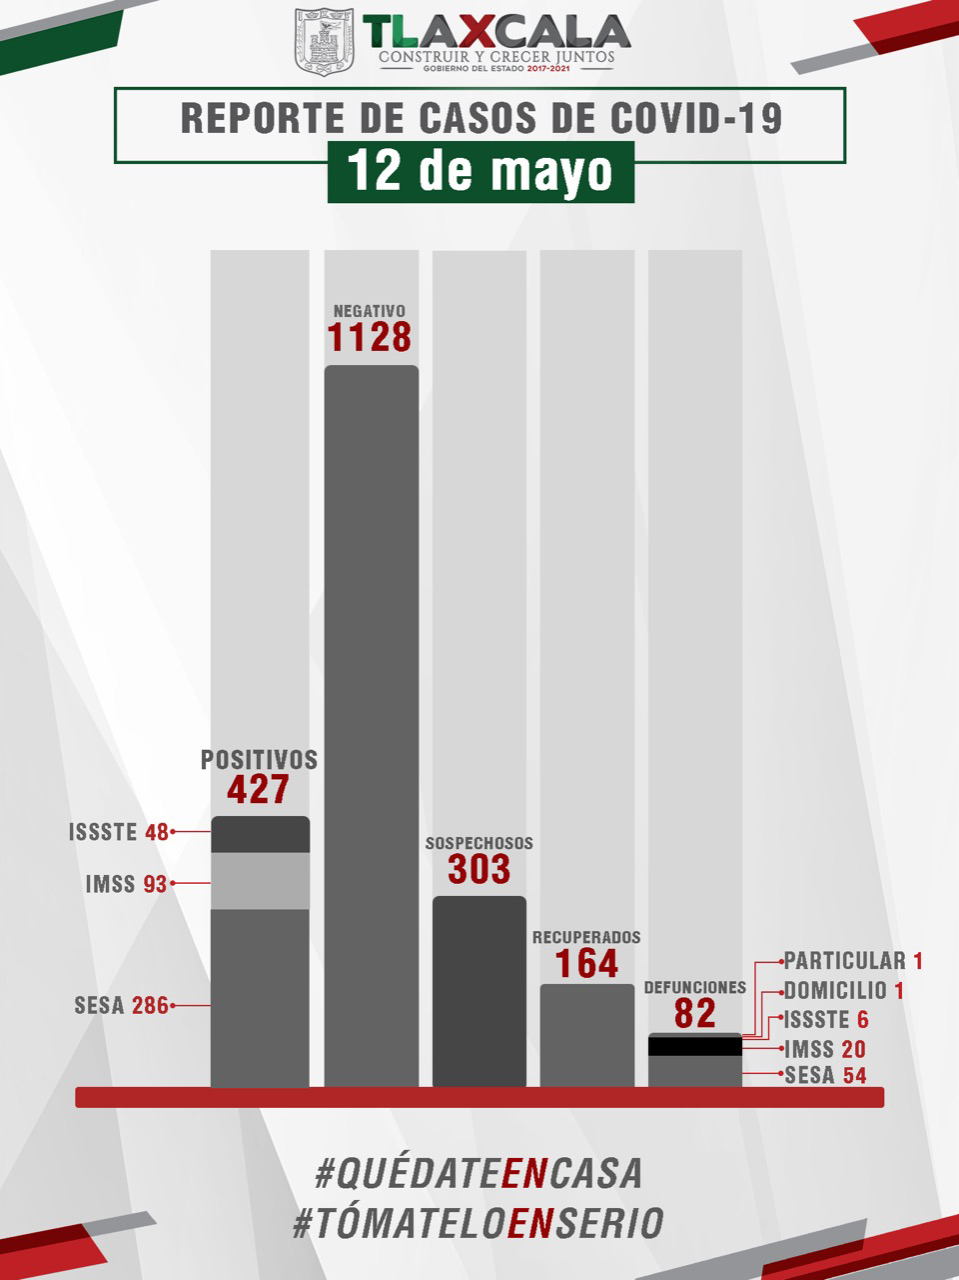 Confirma SESA 42 personas recuperadas,18 casos mas, y seis fallecidos de COVID-19 en Tlaxcala.